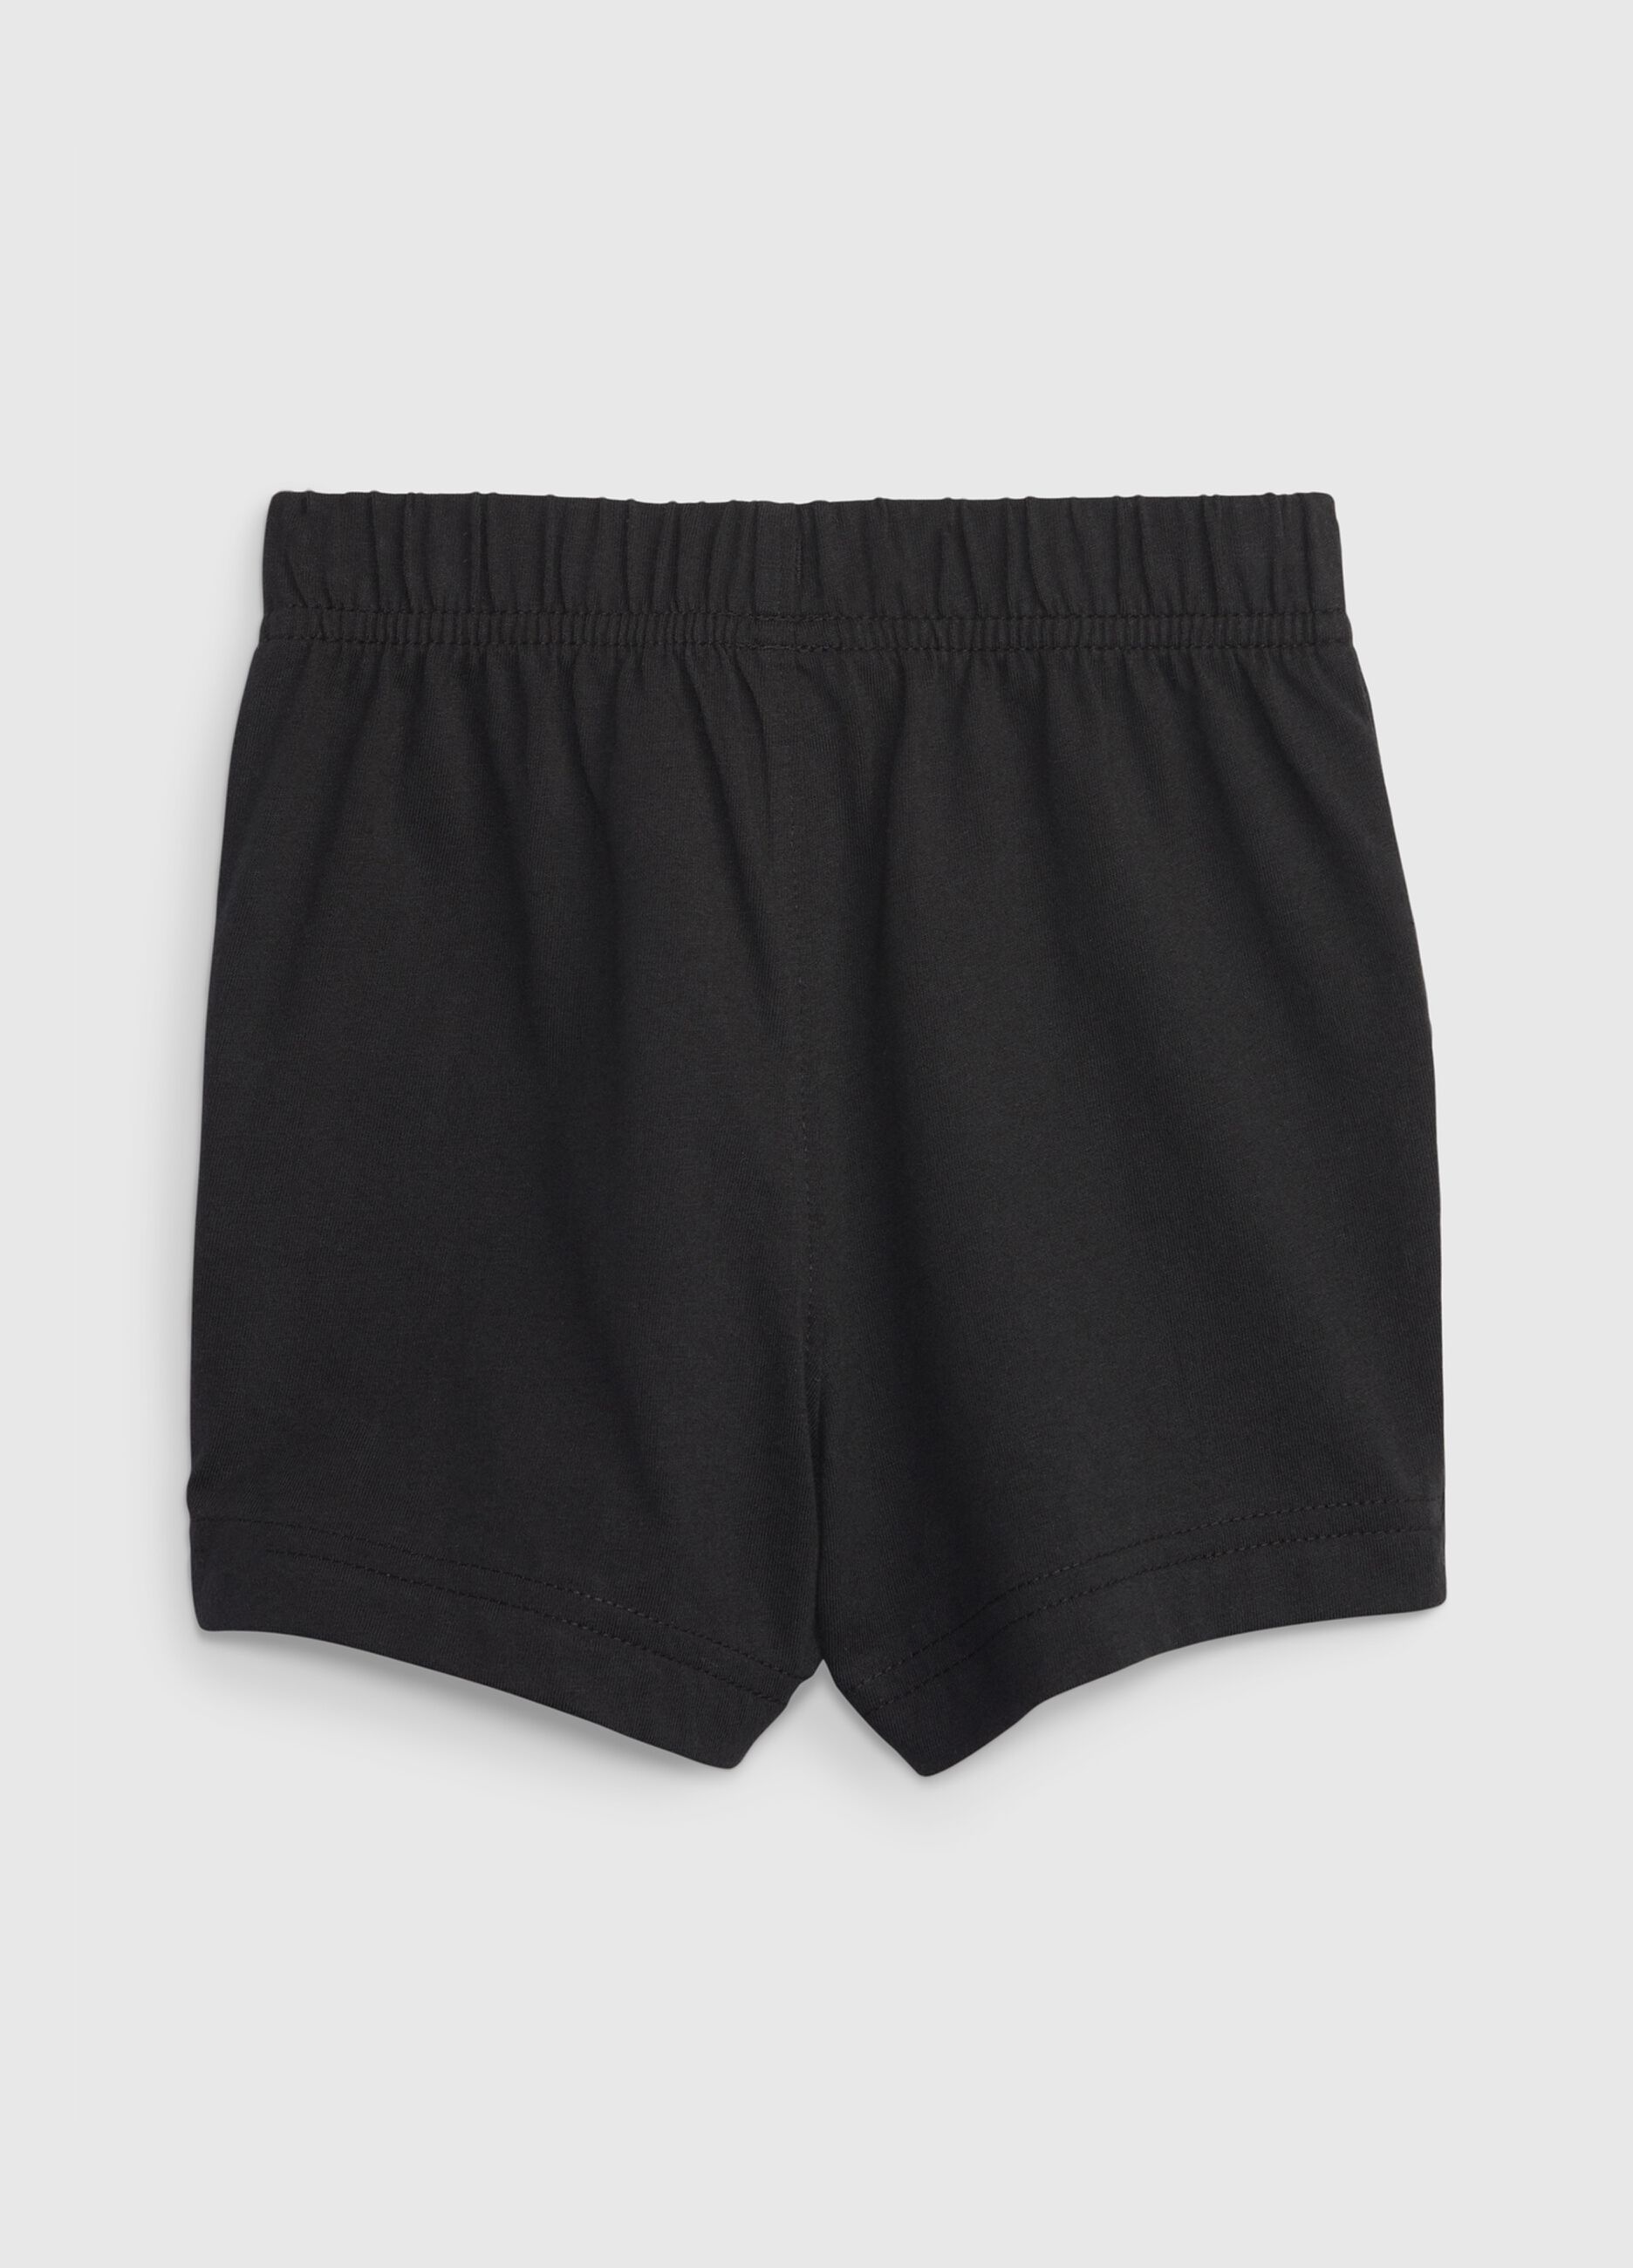 Organic cotton shorts with drawstring